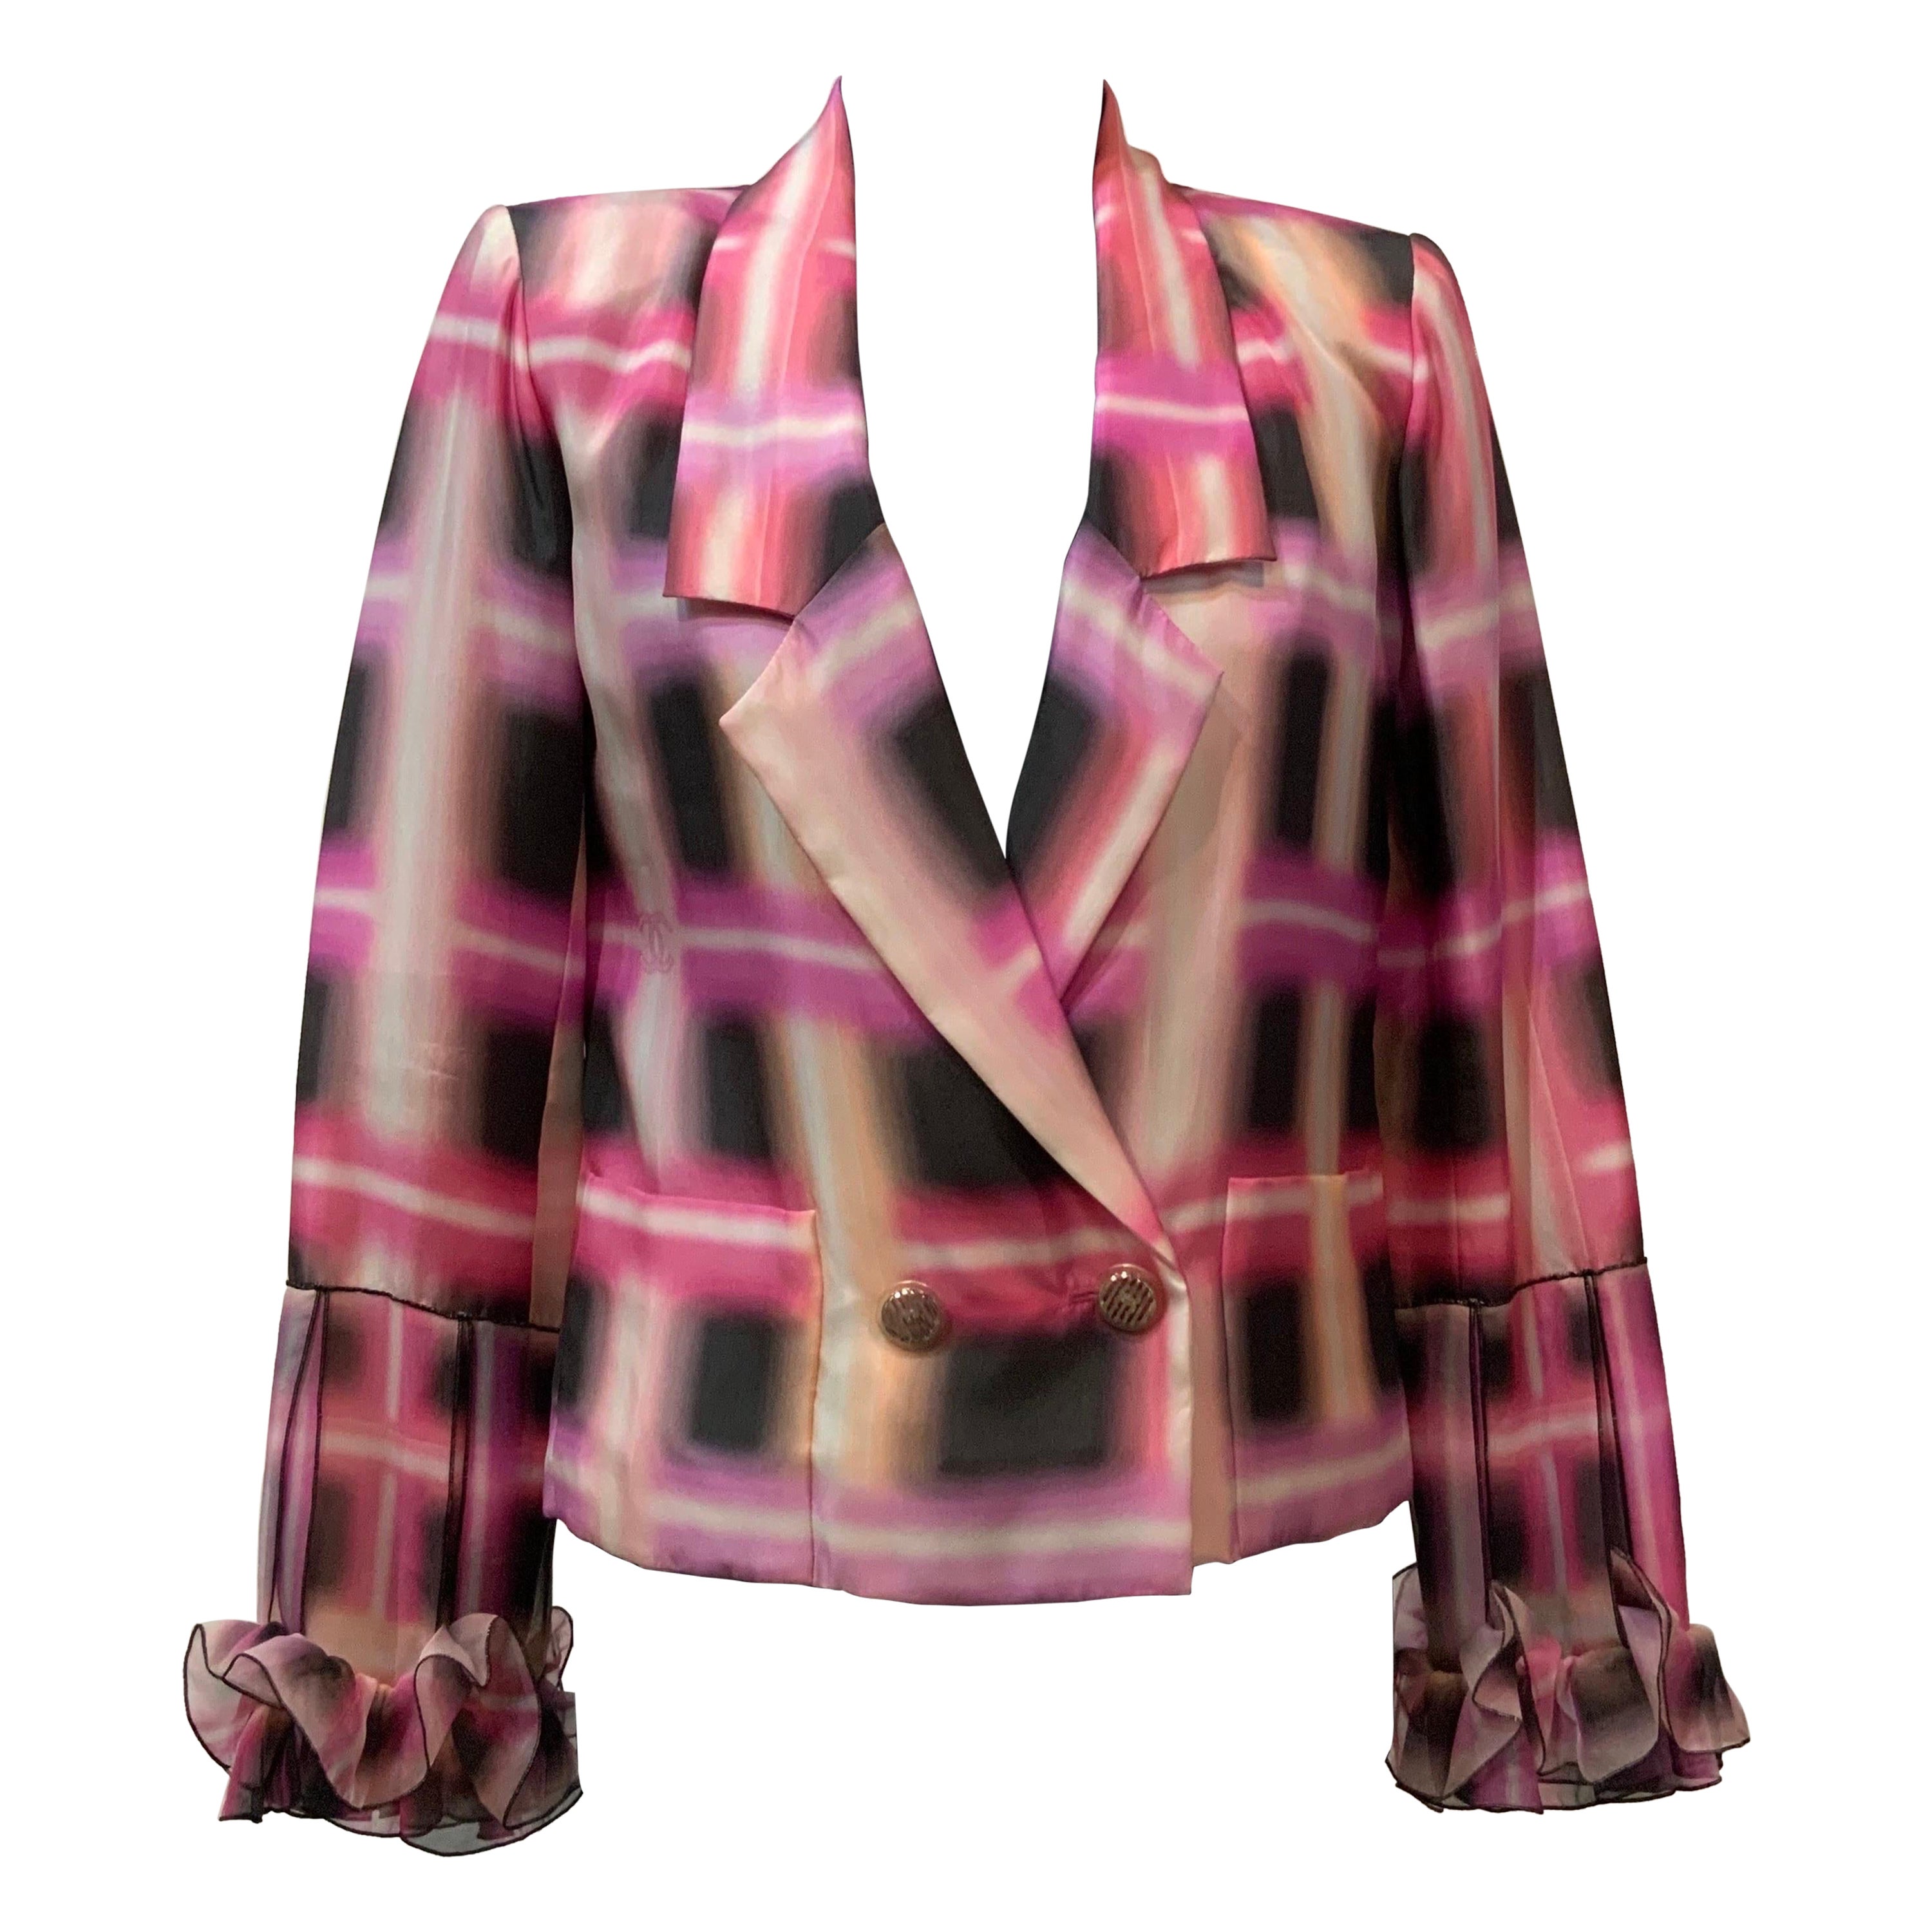 Chanel Spring 2017 RTW pink neon silk double breasted Jacket (veste à double boutonnage en soie néon).